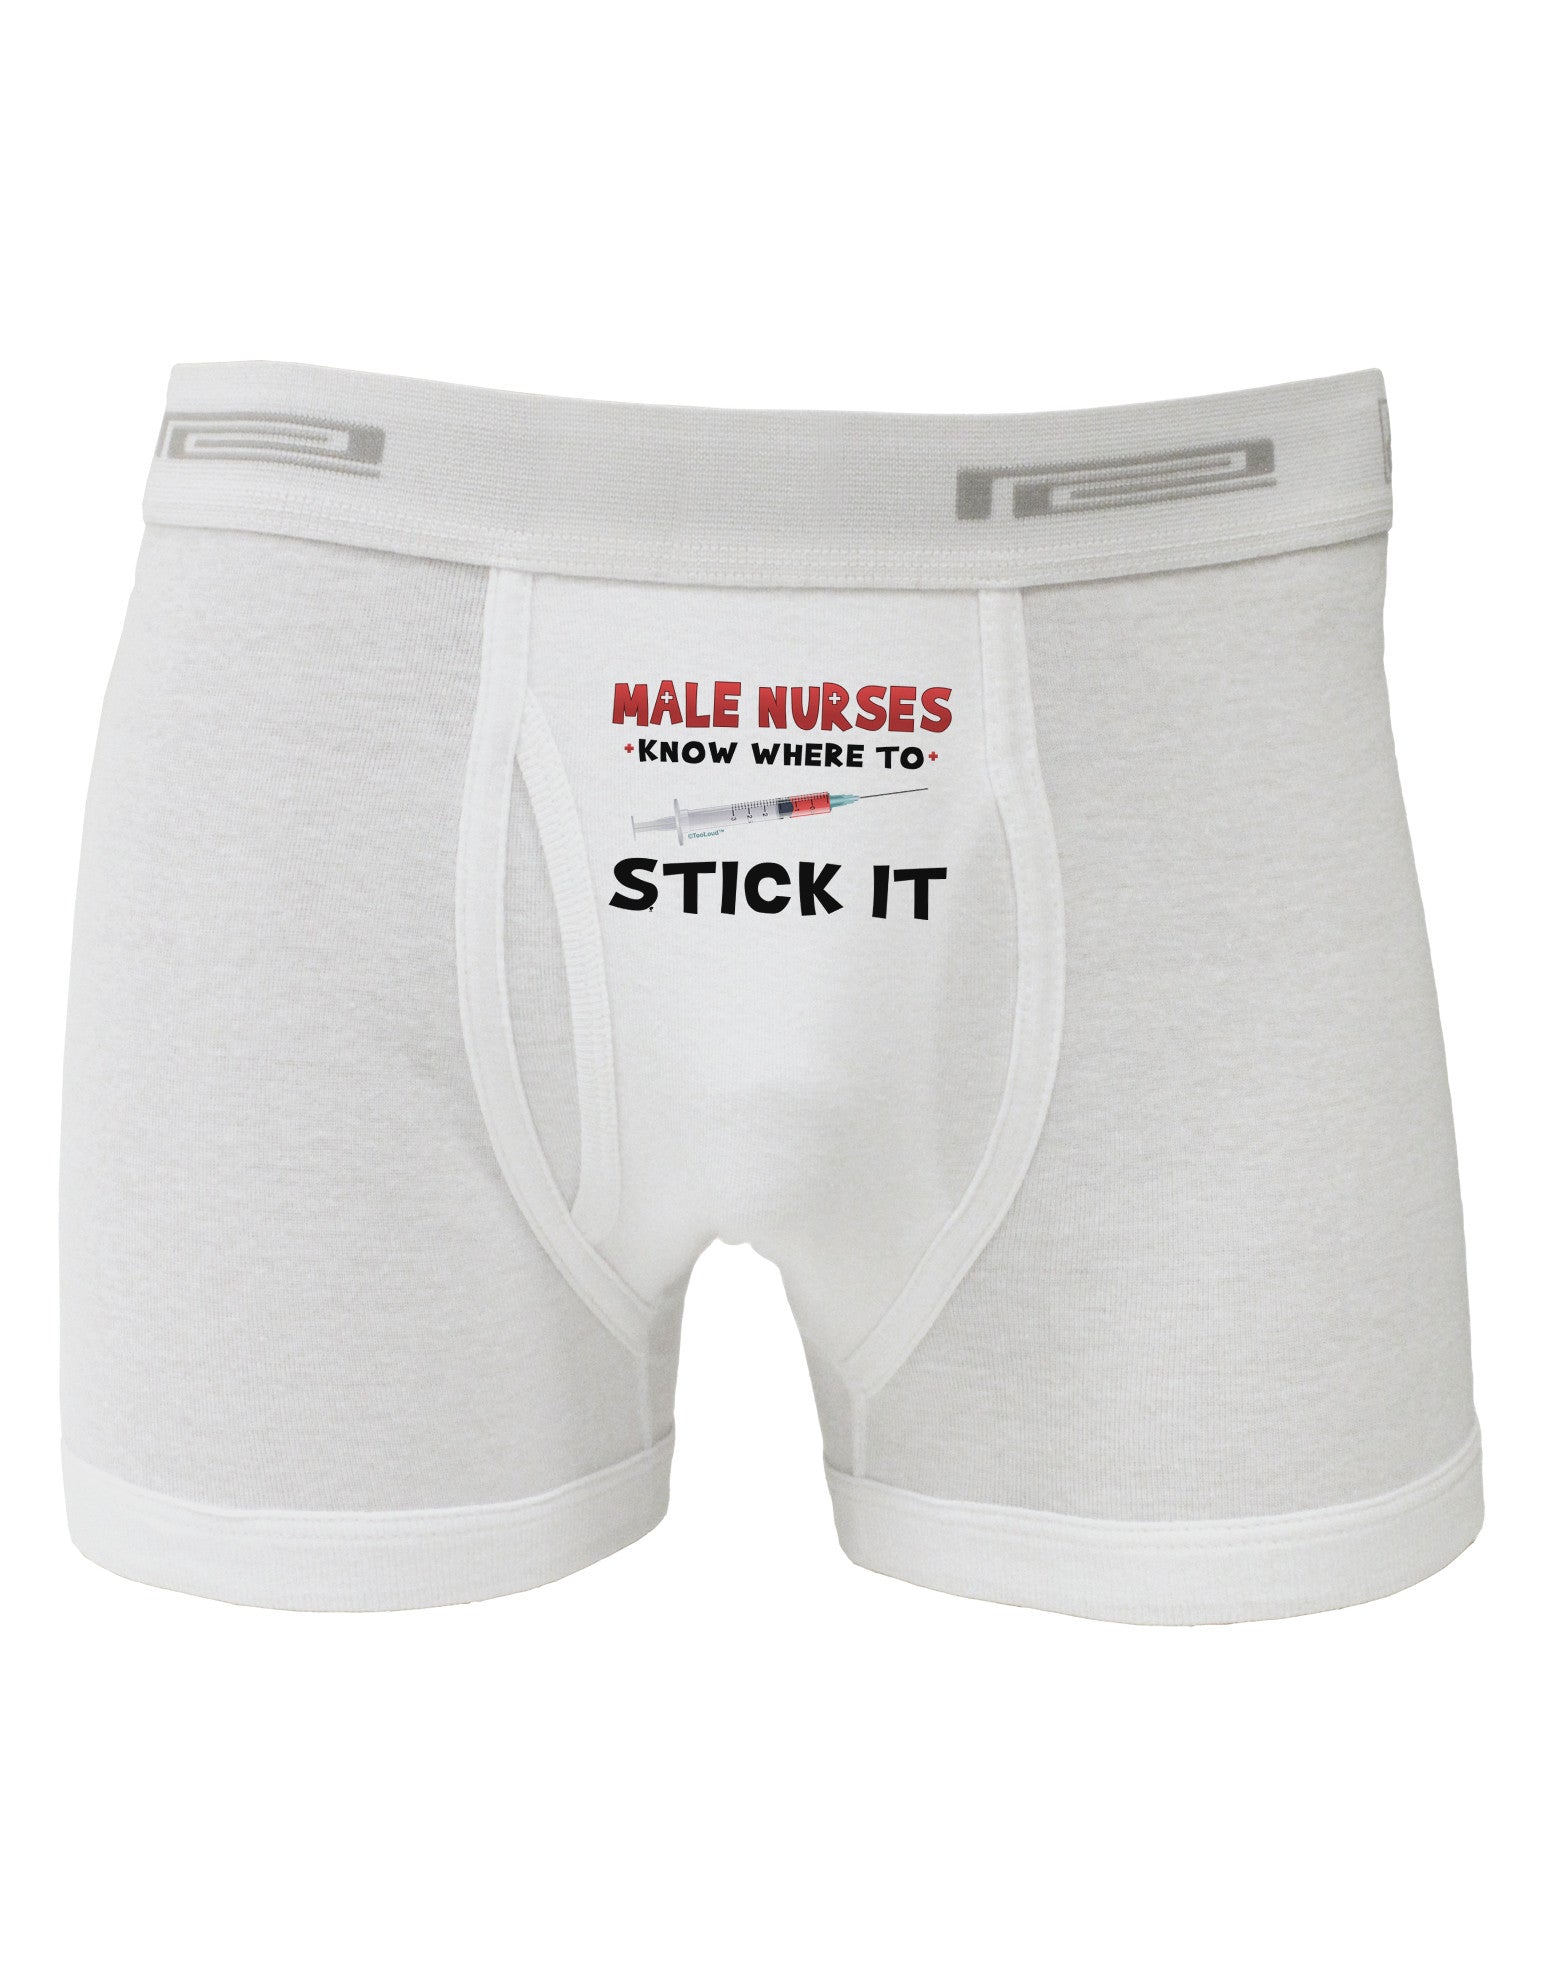 Male Nurses - Stick It Boxer Briefs - Davson Sales